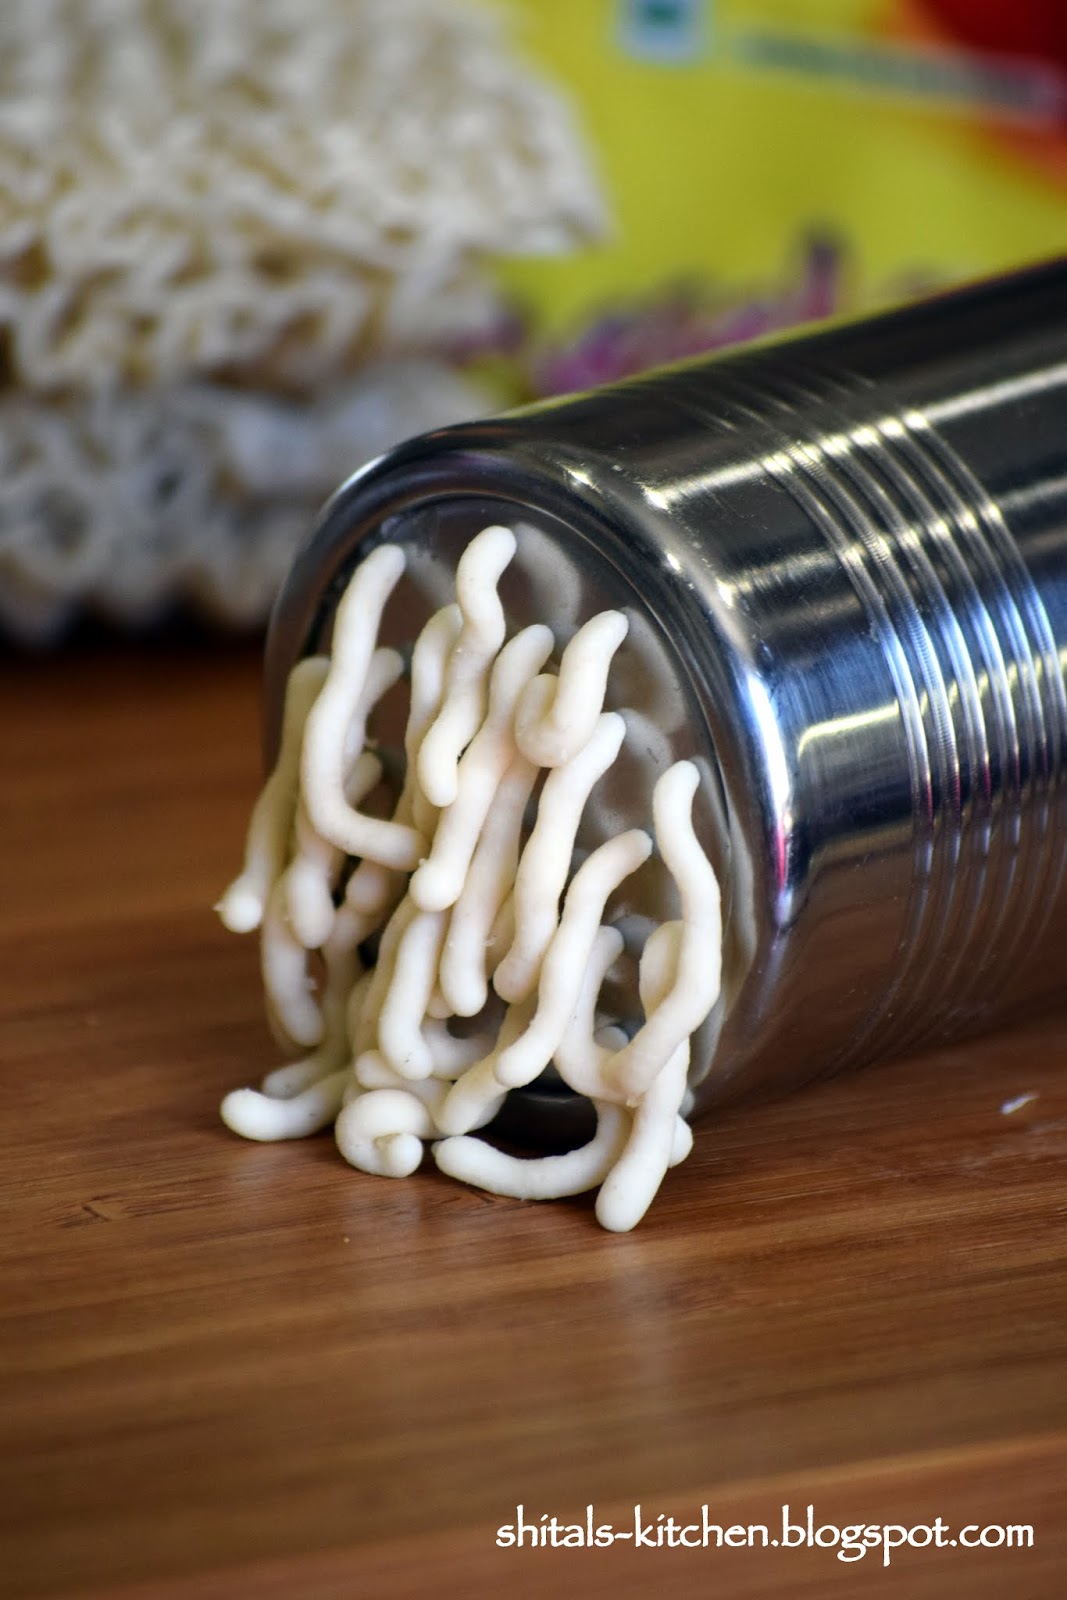 Manual noodle press pasta maker sticking - Seasoned Advice